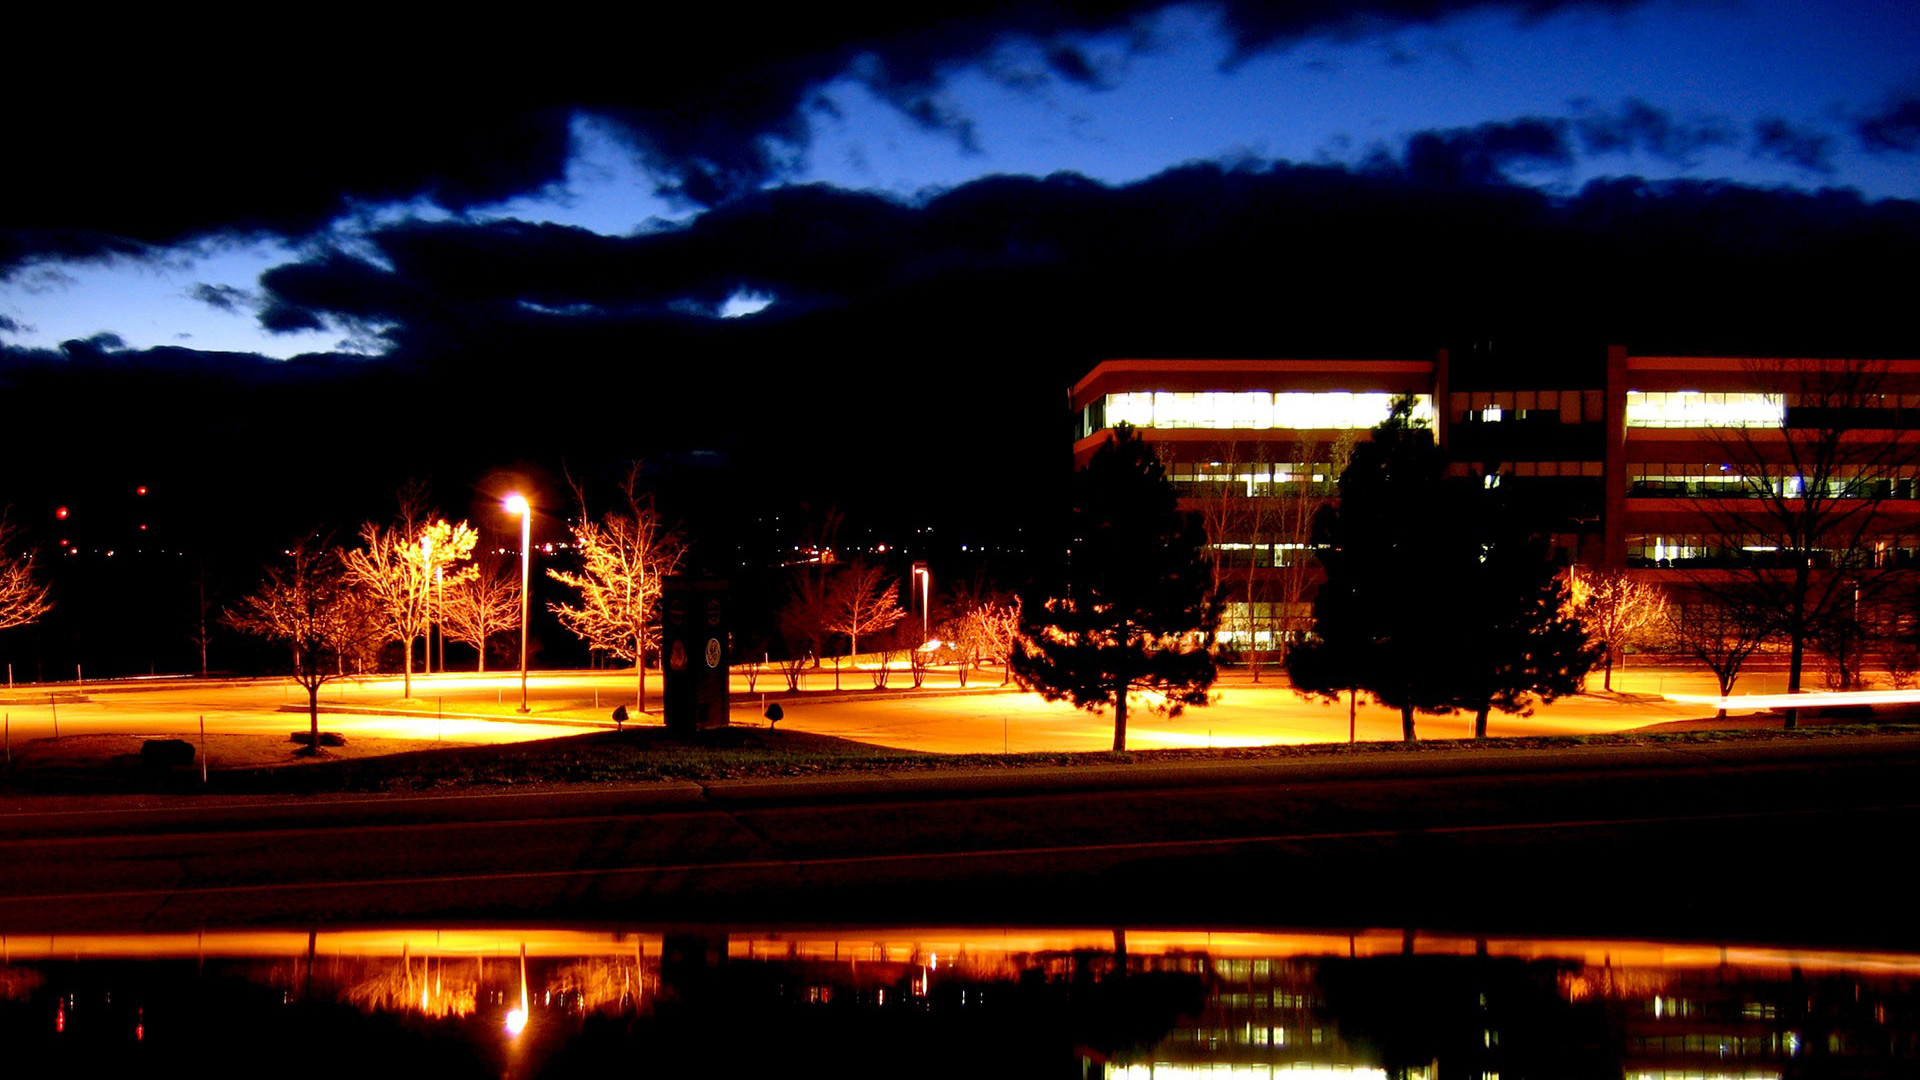 Night Parking Lot The University Campus Street Light Trees Overcast 1920x1080